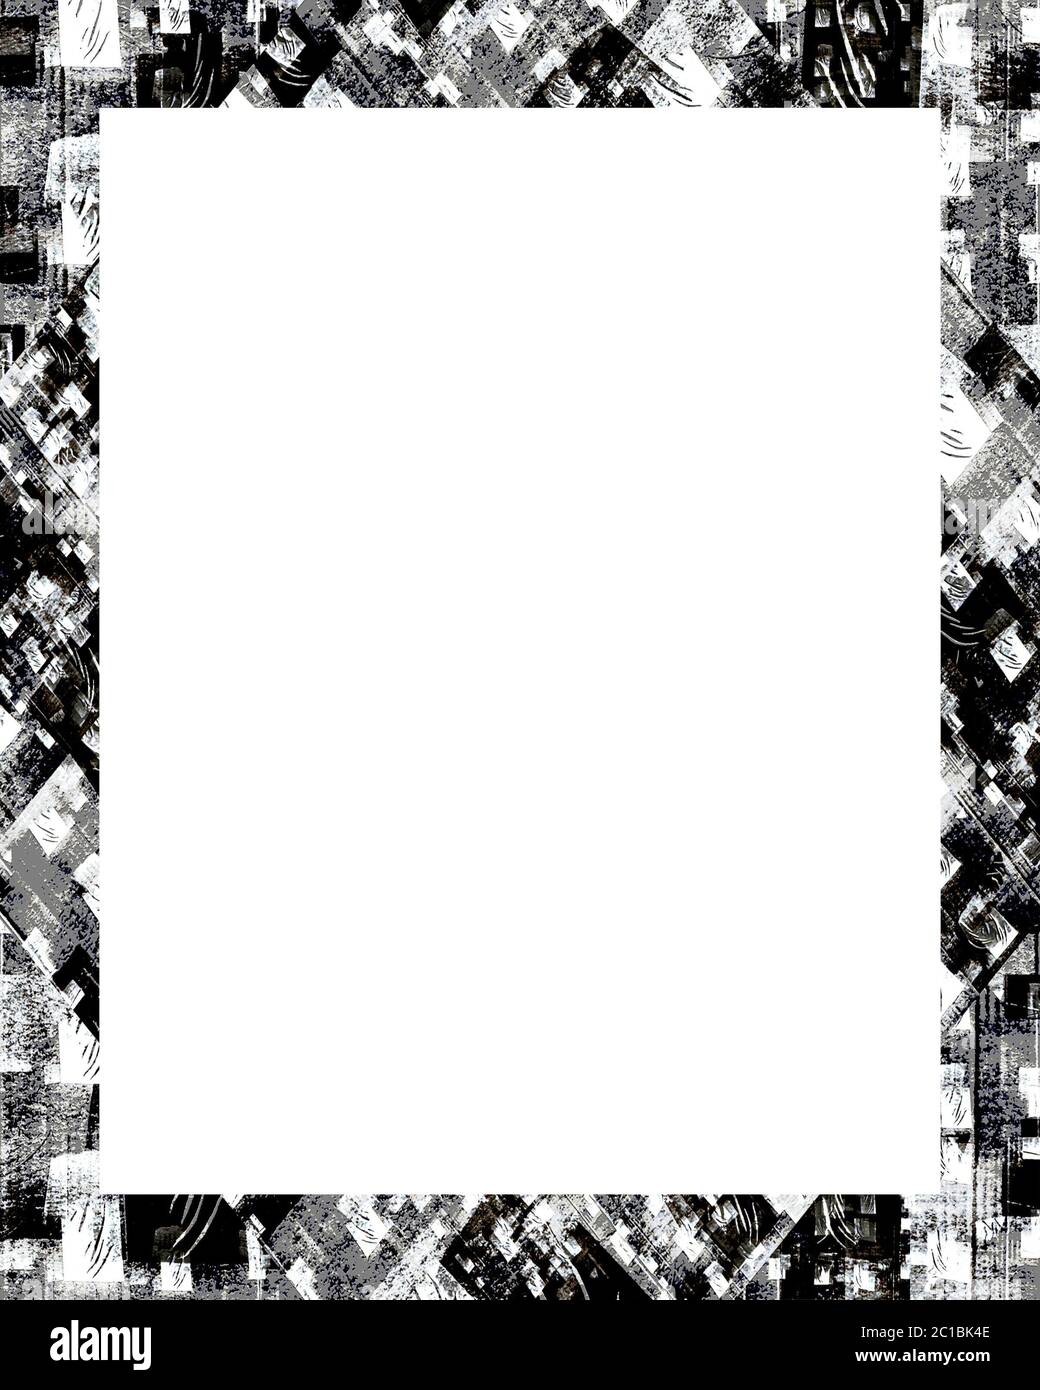 https://c8.alamy.com/comp/2C1BK4E/white-frame-with-decorated-borders-2C1BK4E.jpg